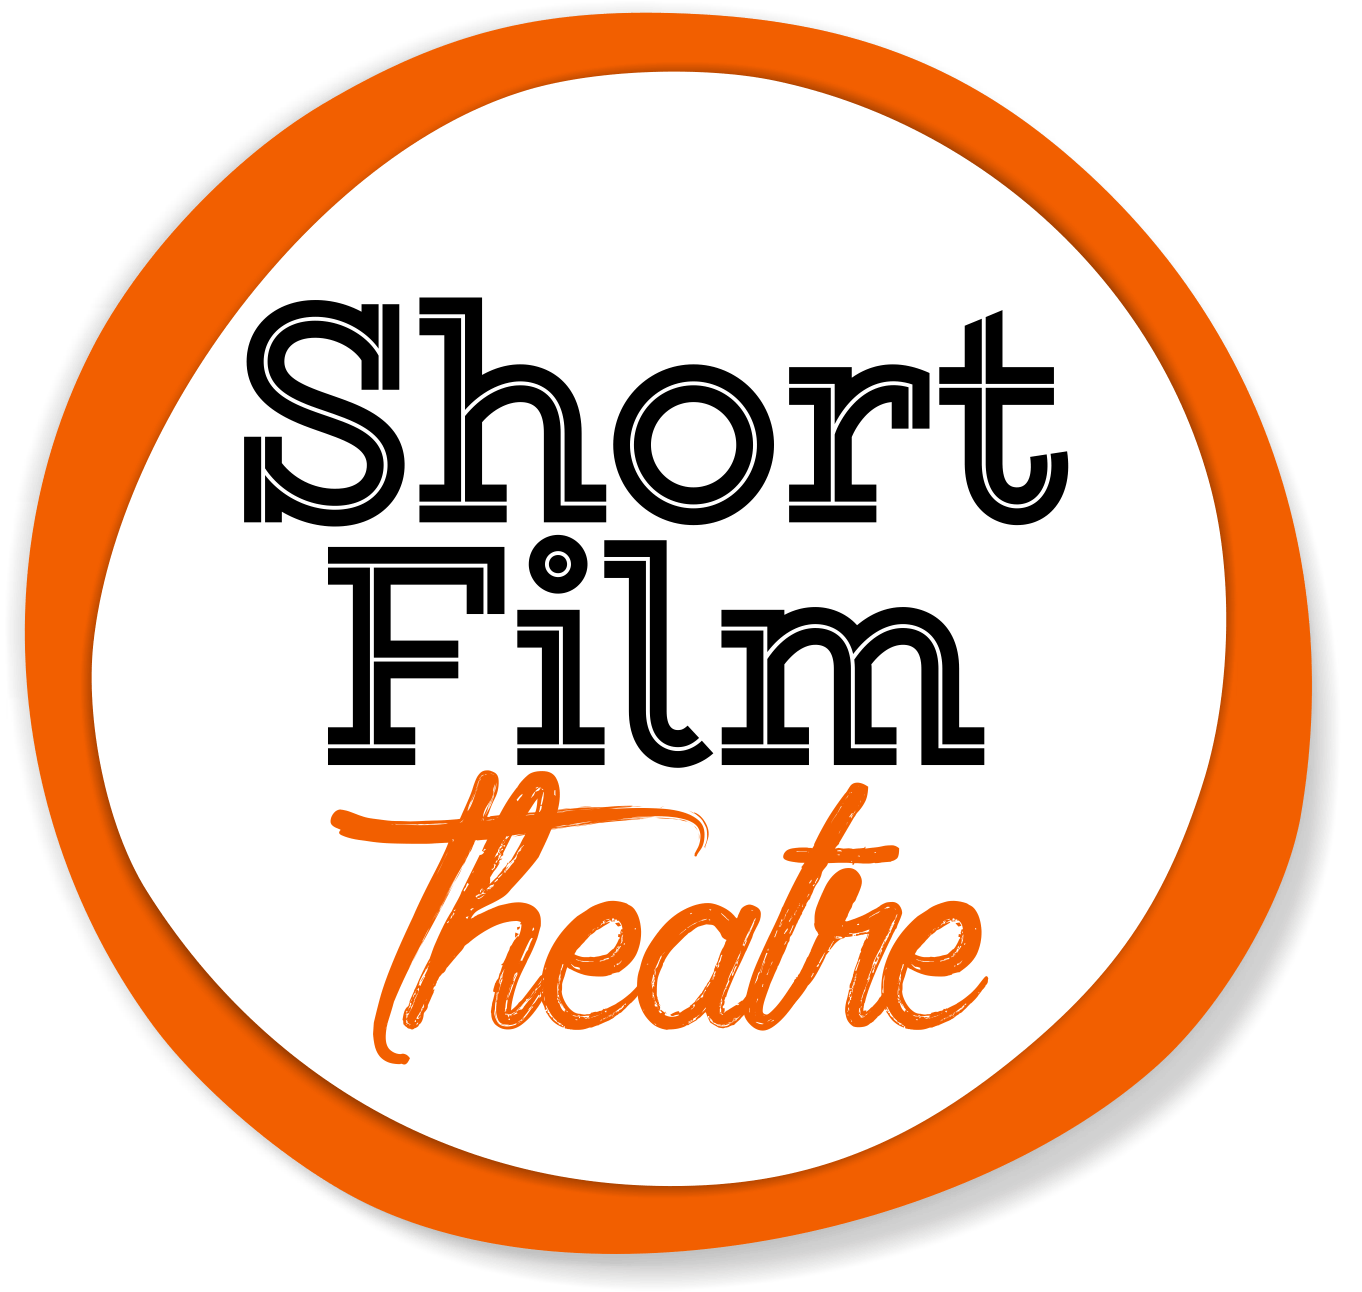 Short Film Logo - Short Film Theatre - Home